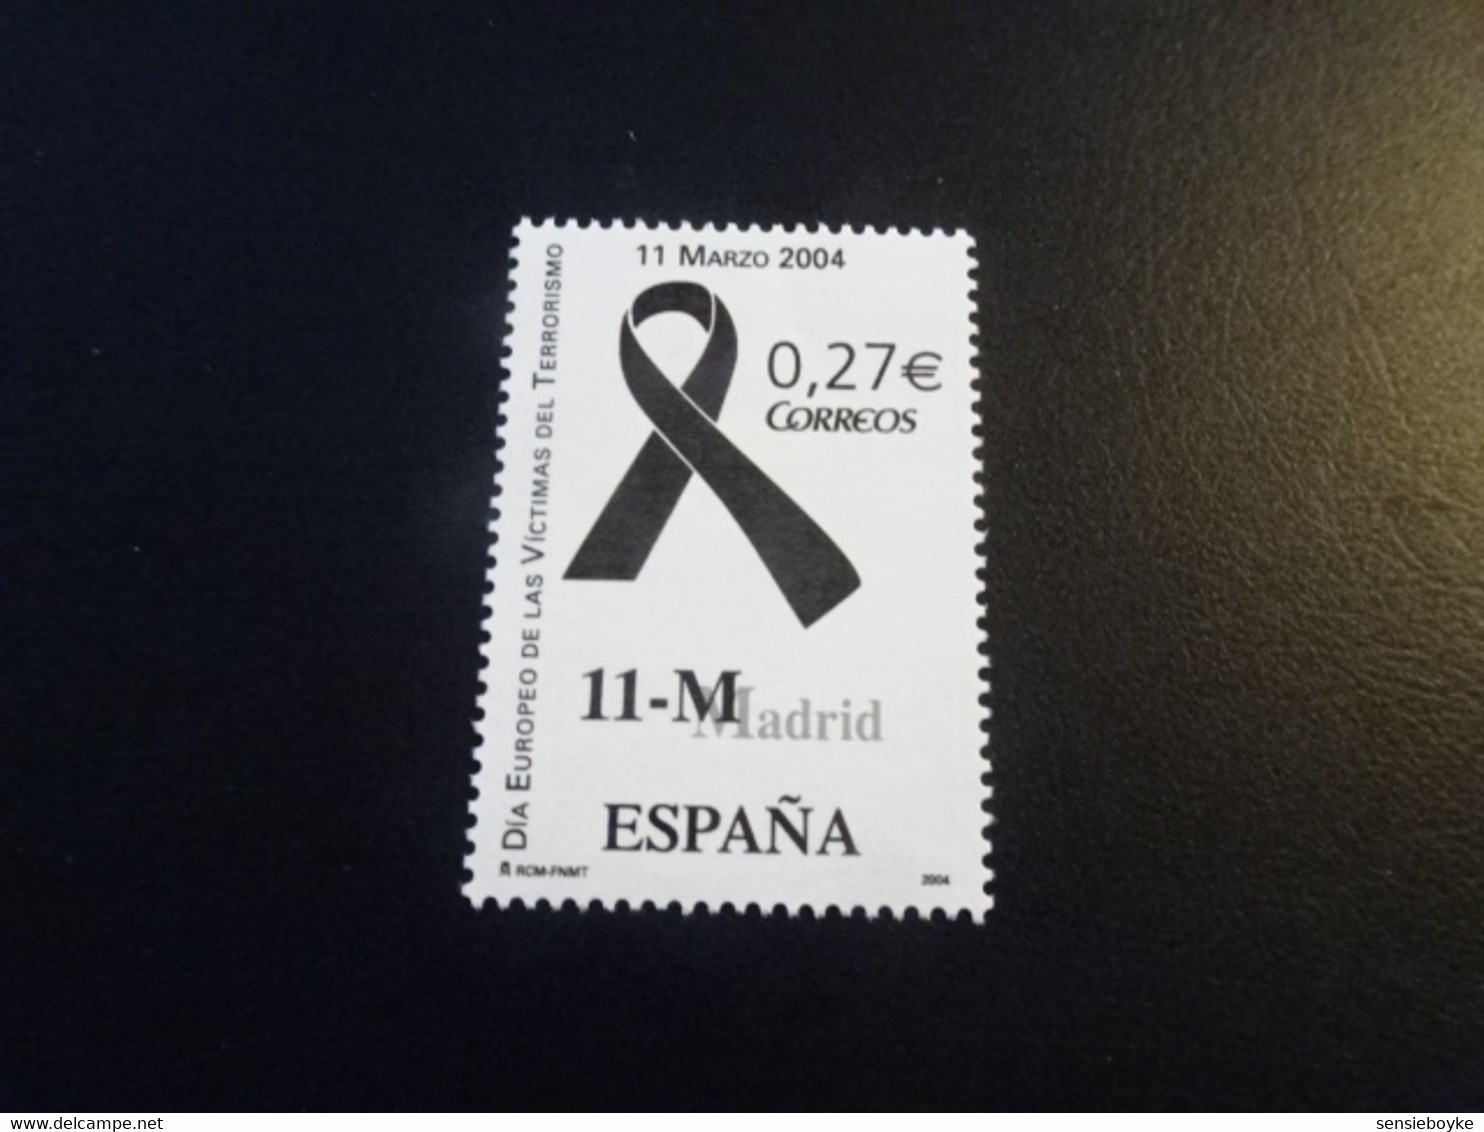 EU2116 - Stamps - One Self-adhesive    MNH Spain 2004 - 11-M Madrid - Terror - European Ideas